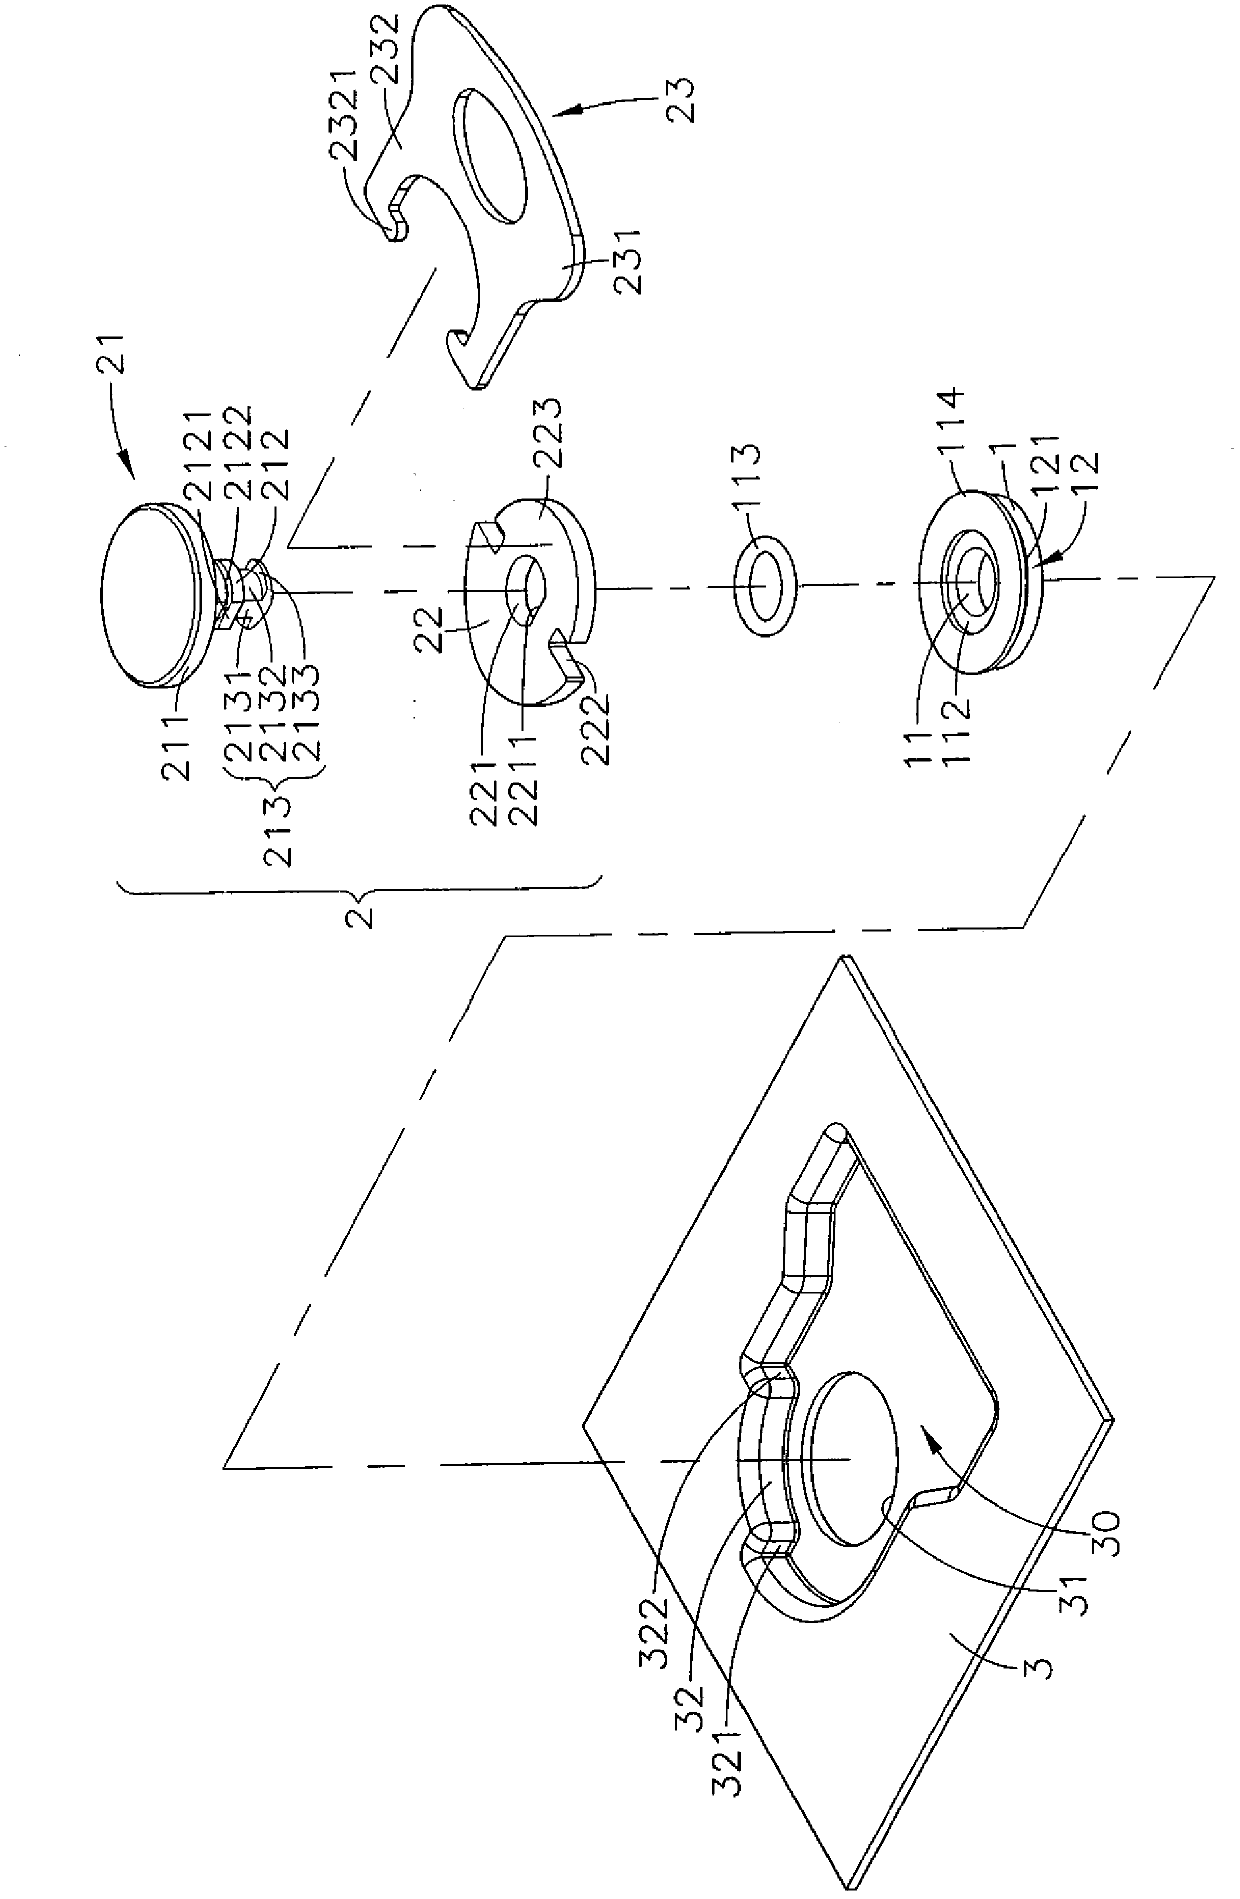 BTB (board to board) rotary fastening device